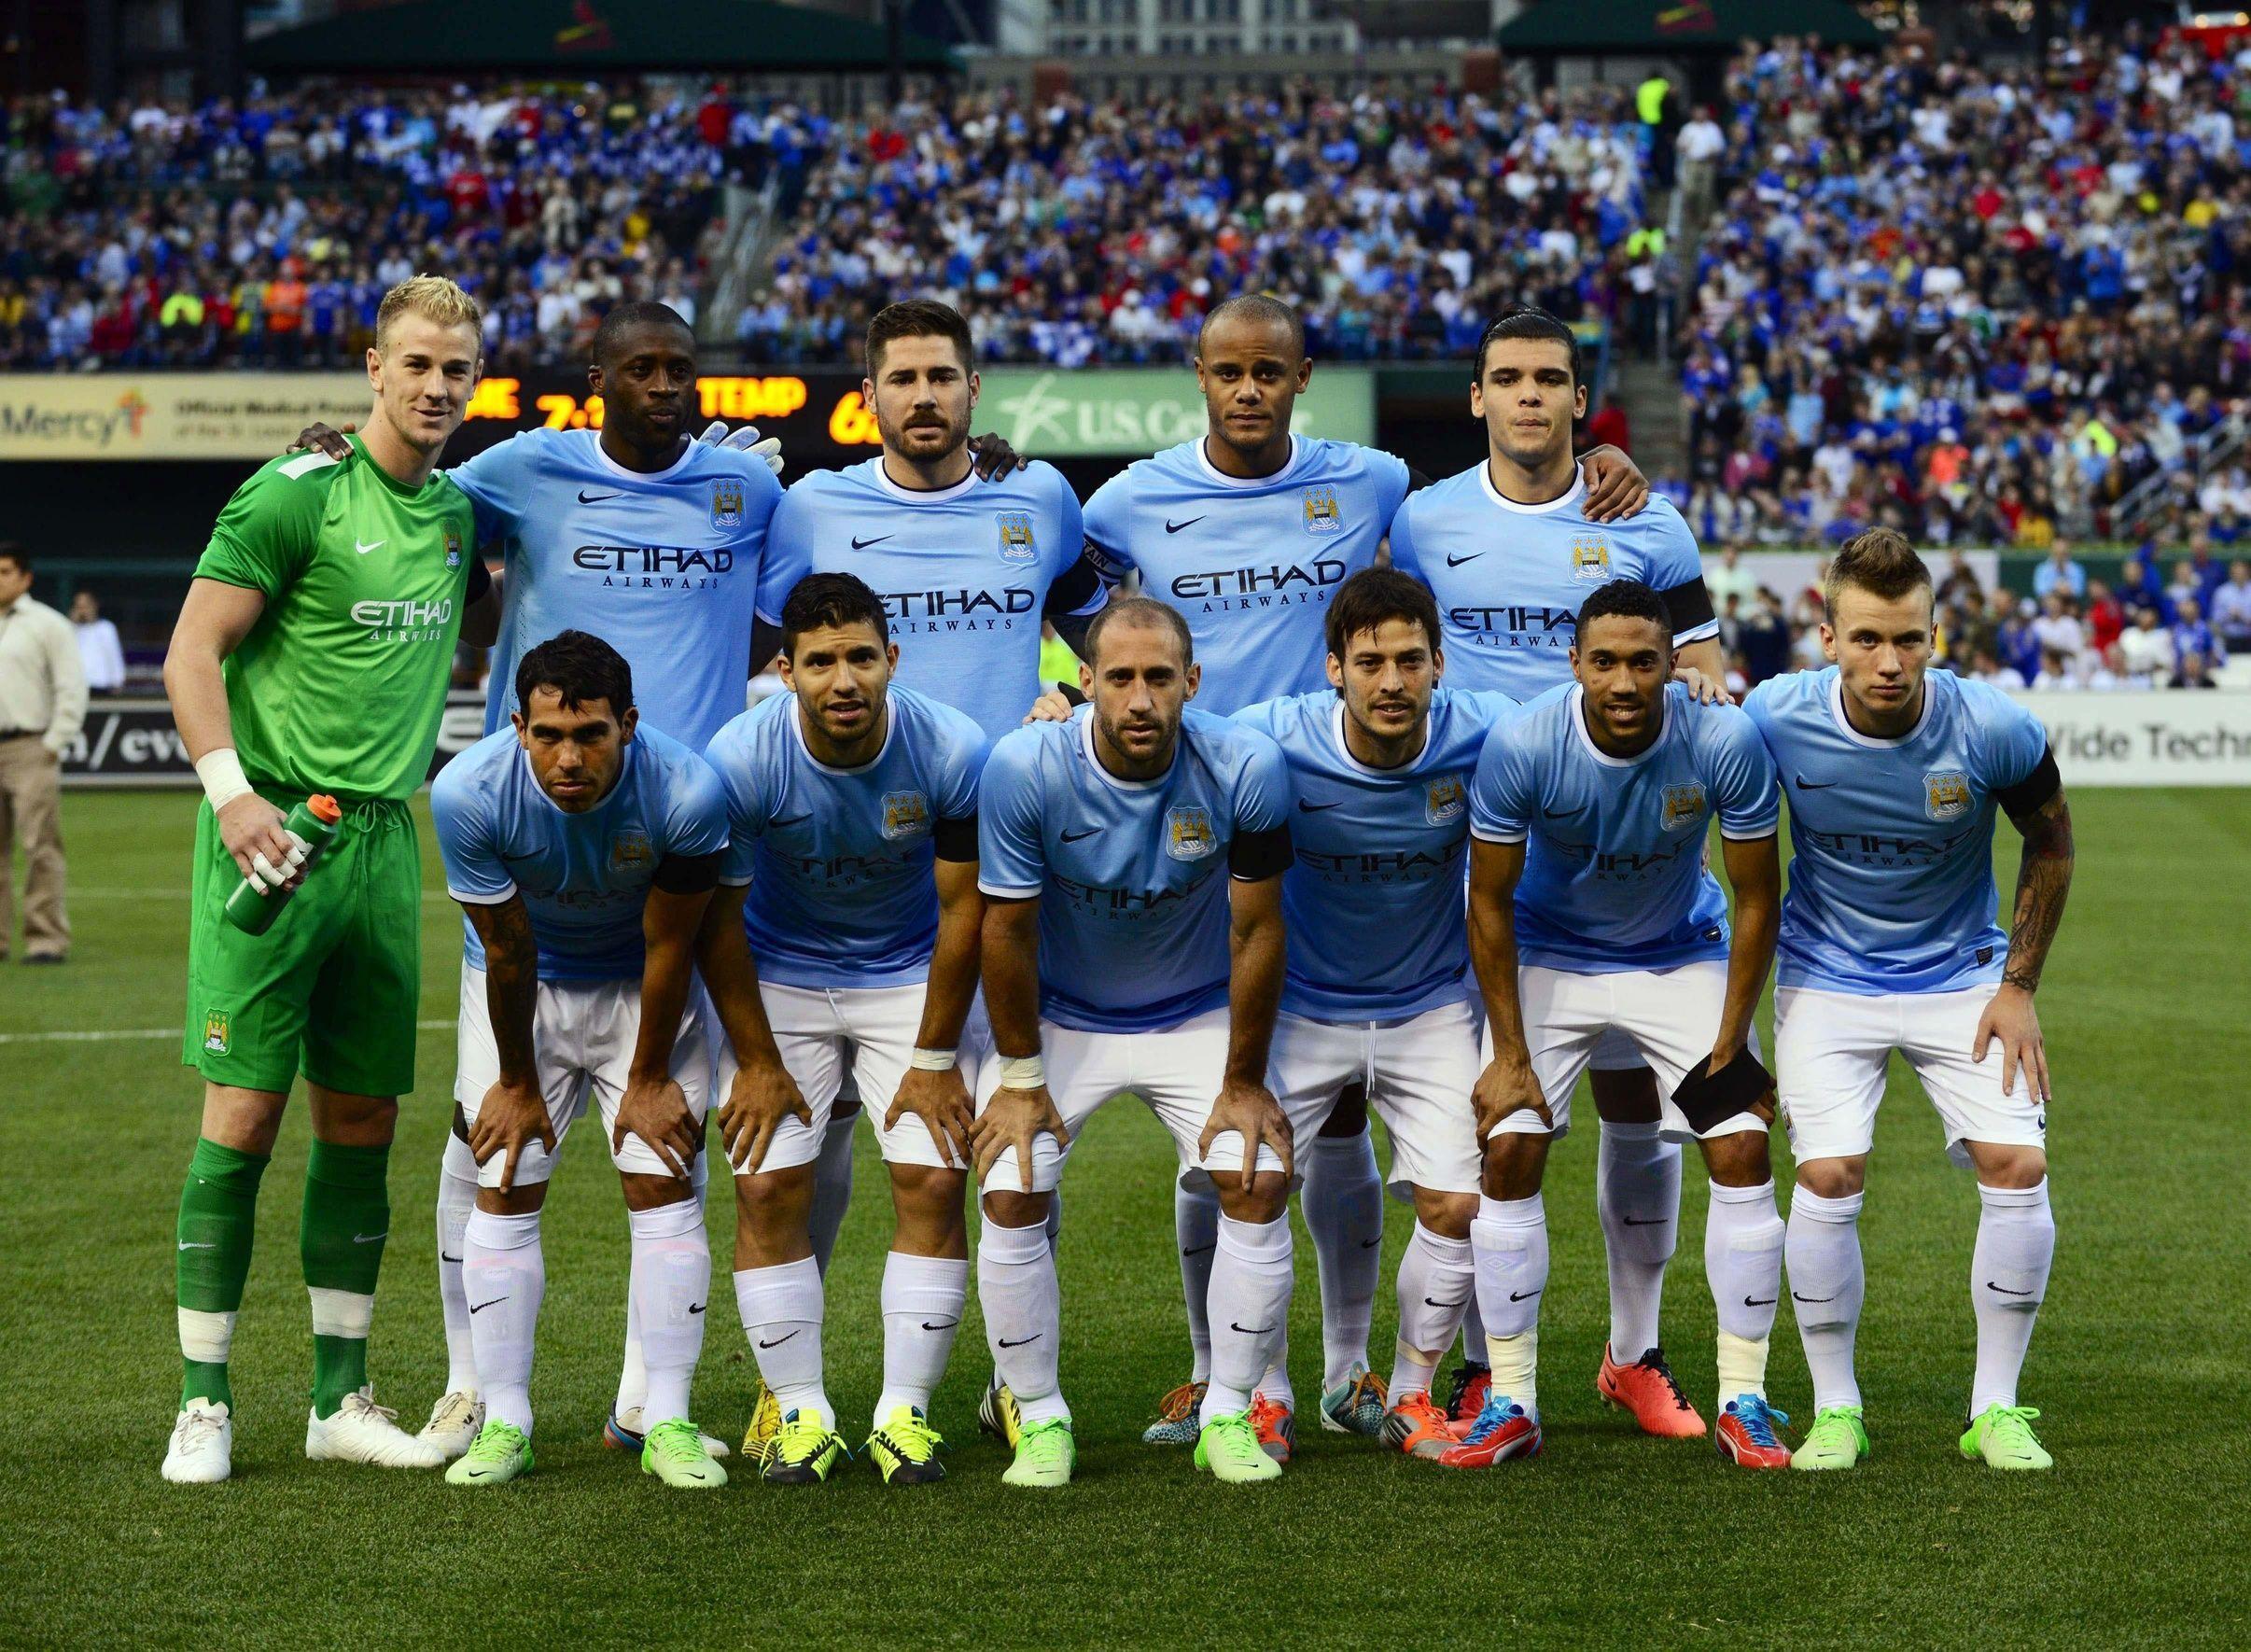 Leicester City Wallpaper Full Team 2016 Manchester City. HD